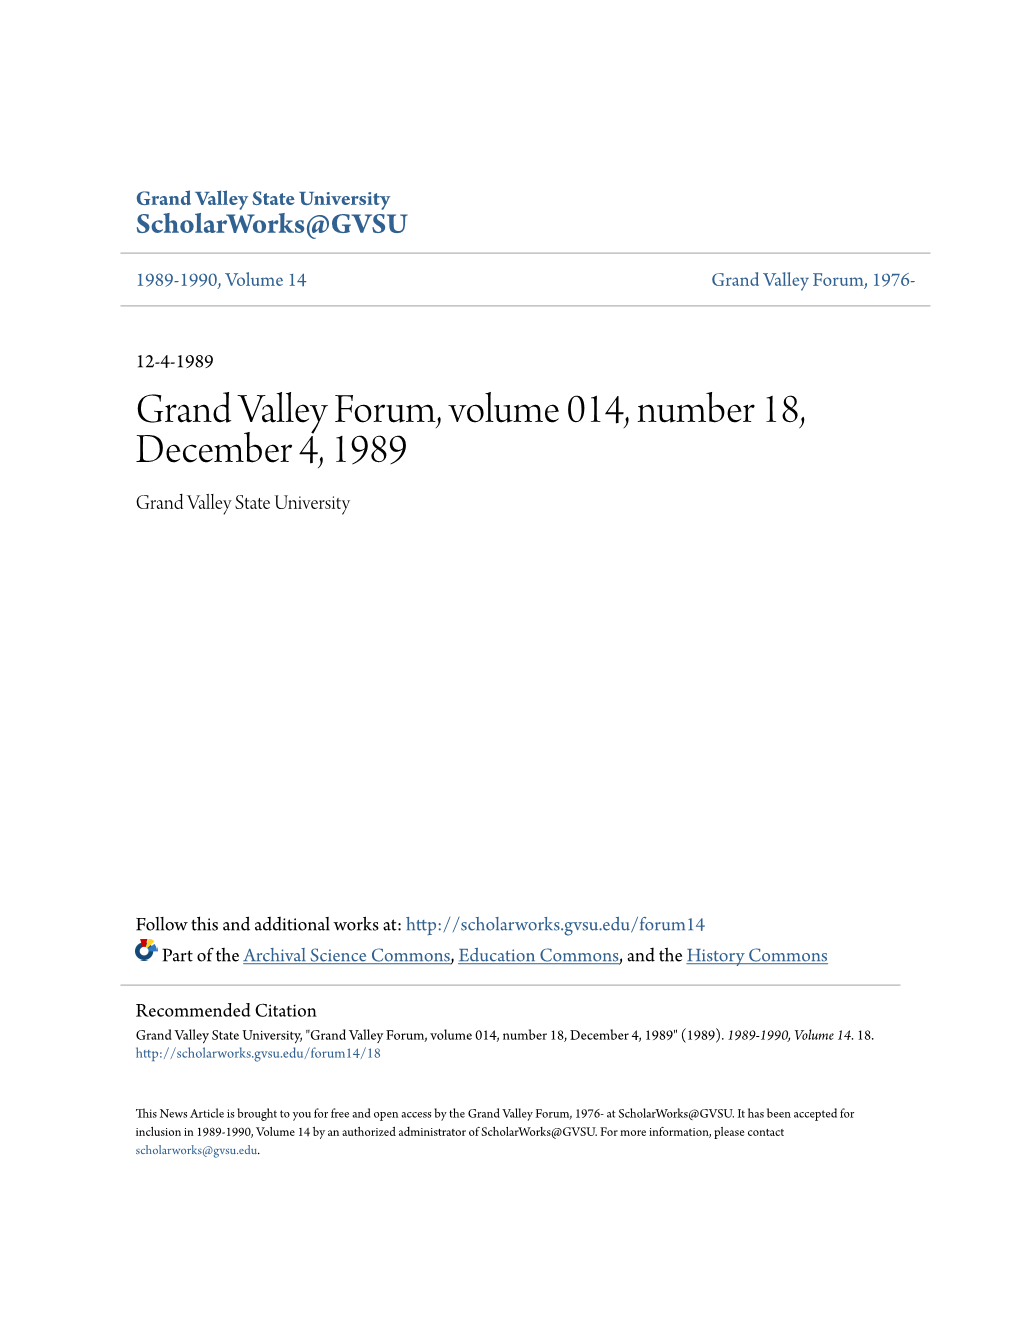 Grand Valley Forum, Volume 014, Number 18, December 4, 1989 Grand Valley State University